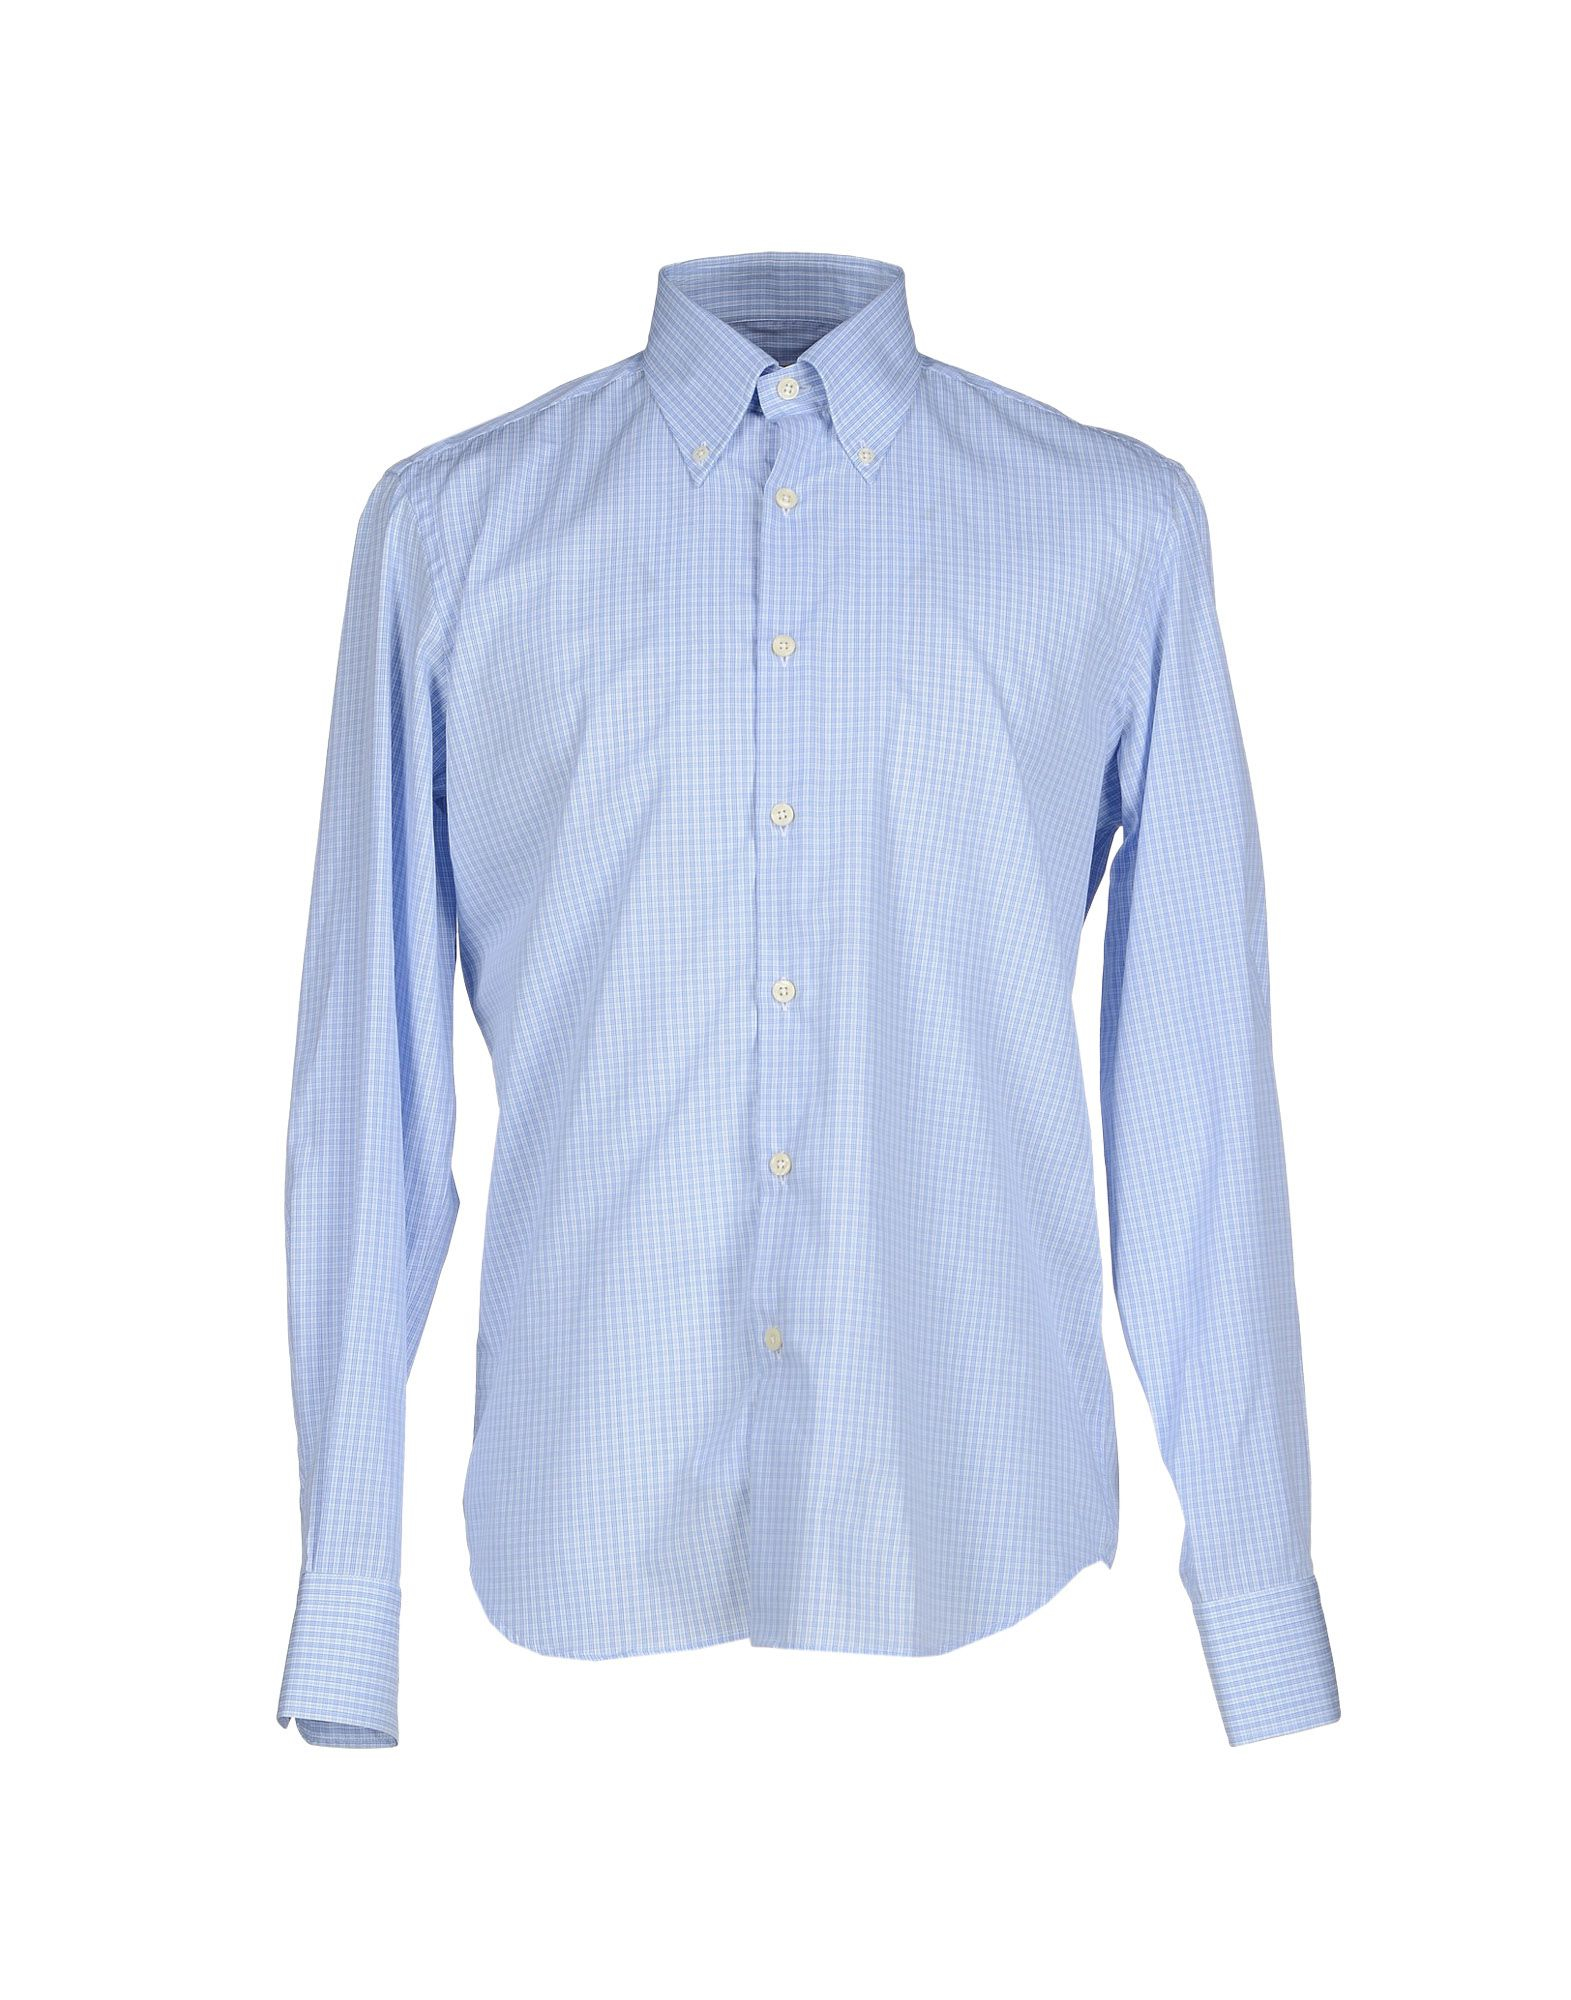 Lyst - Gianfranco Ferré Shirt in Blue for Men